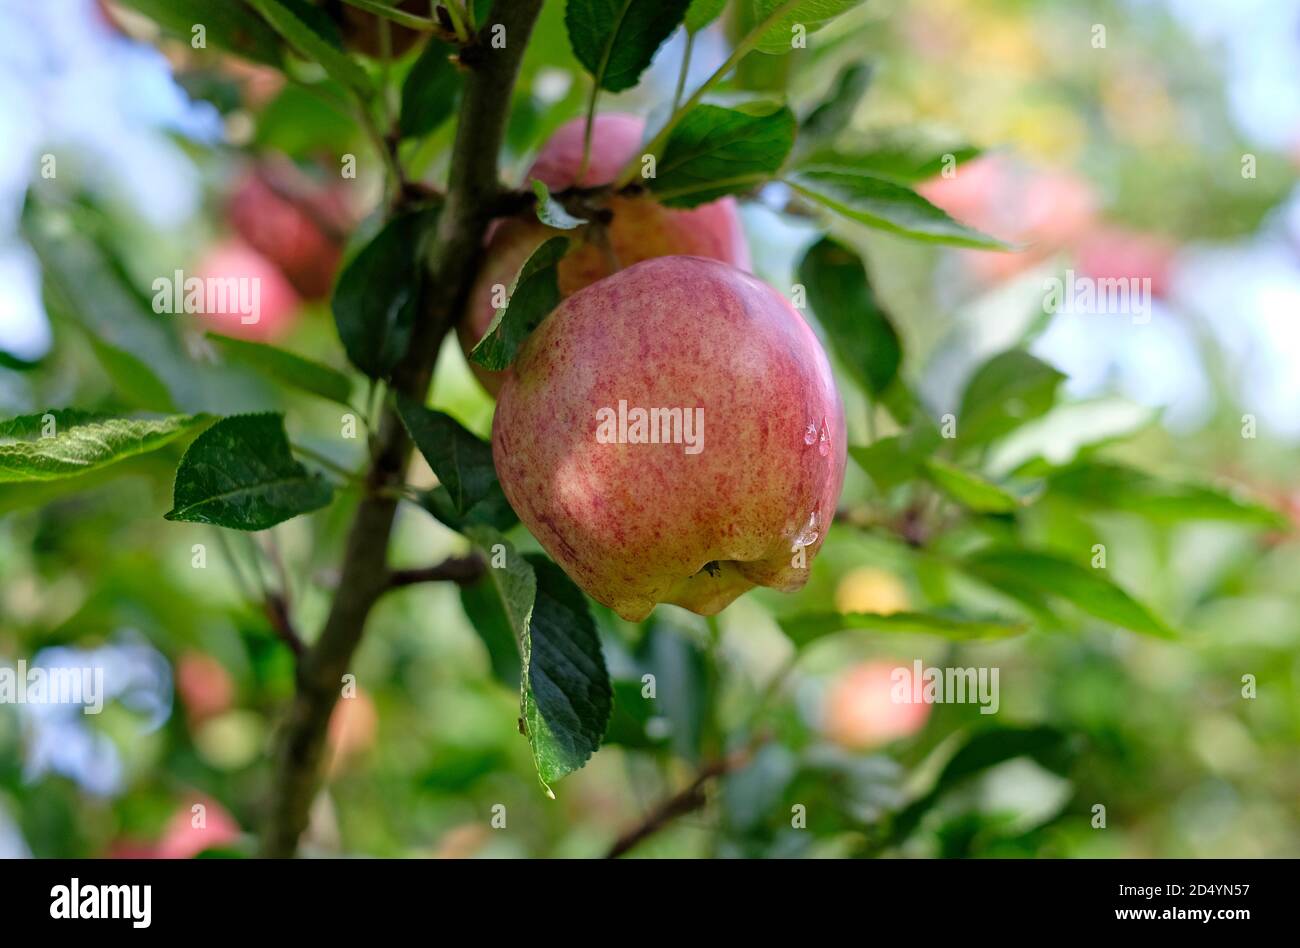 https://c8.alamy.com/comp/2D4YN57/small-red-apple-on-tree-in-an-english-garden-herefordshire-england-2D4YN57.jpg